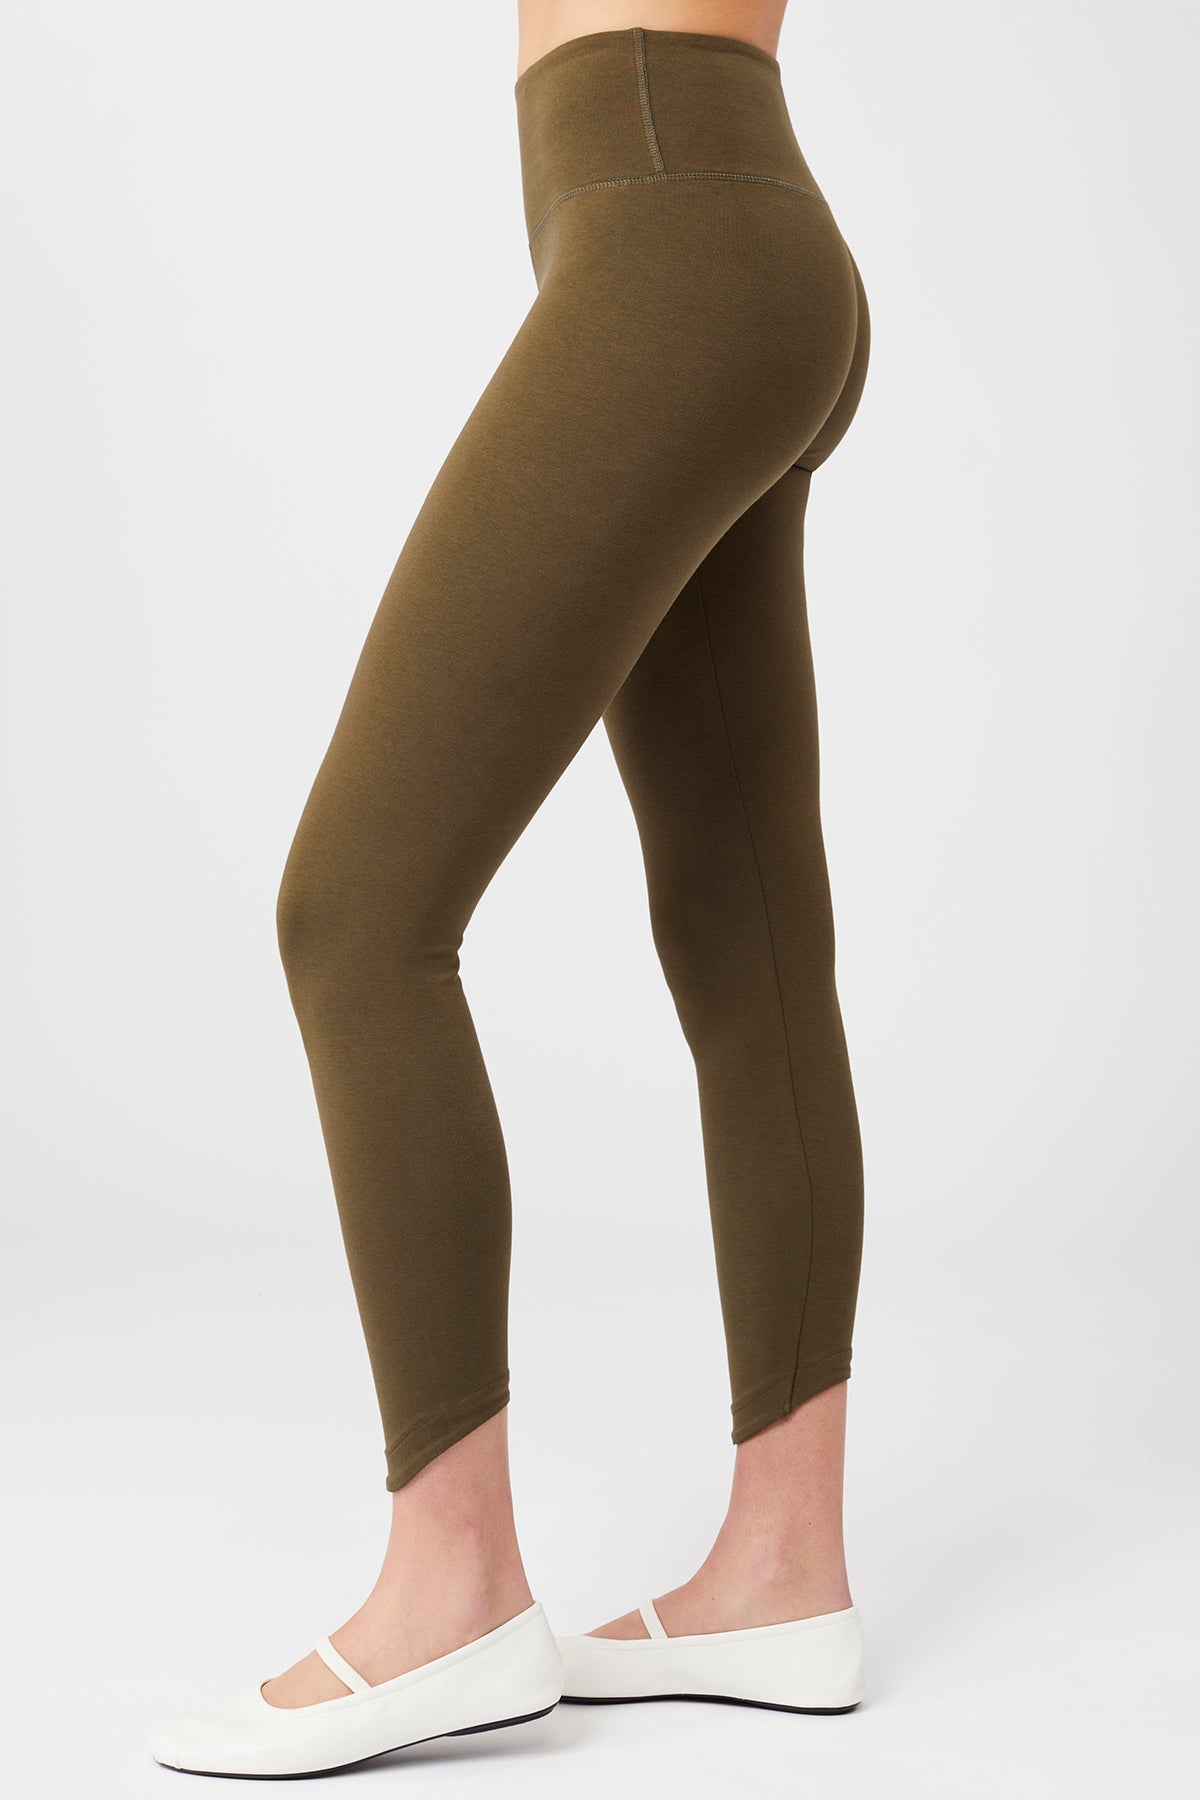 Legging Básica + Top Marcia Bronze – Studio24 – Moda Fitness